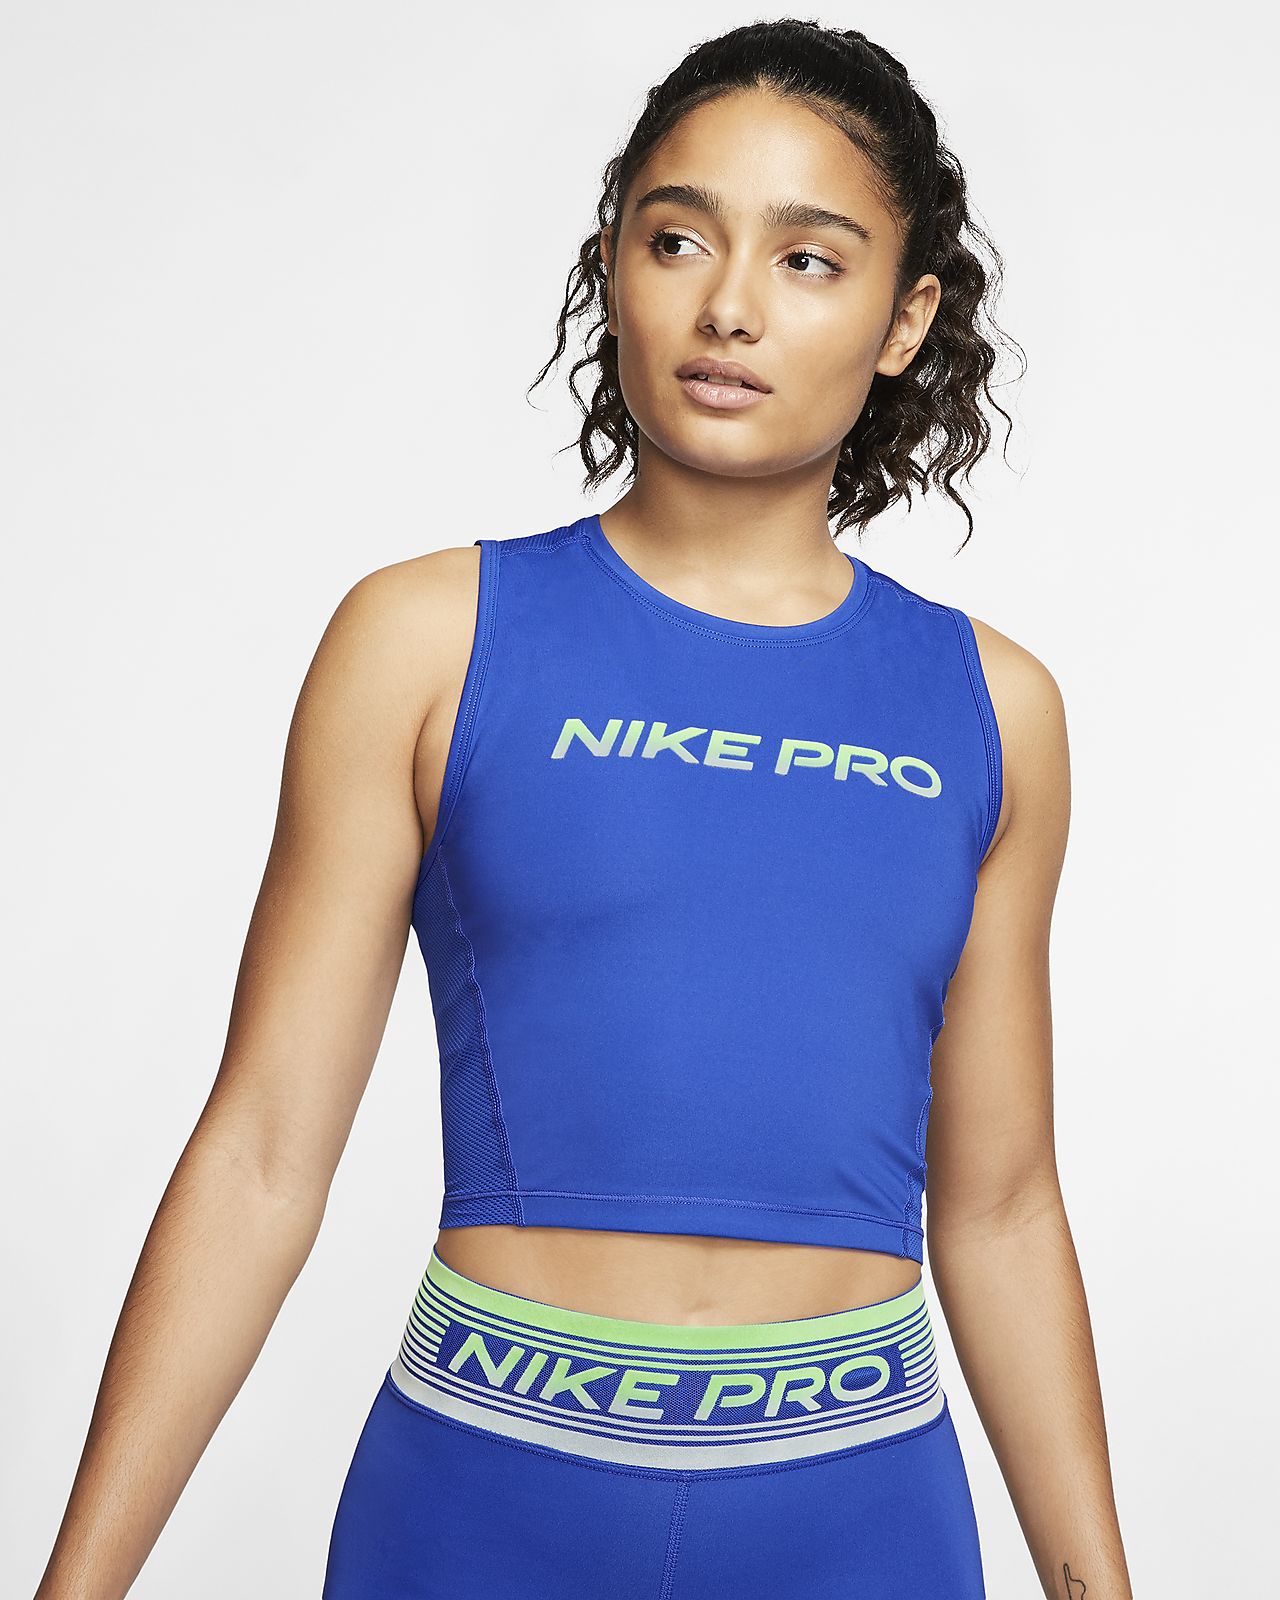 nike women's pro cropped tank top